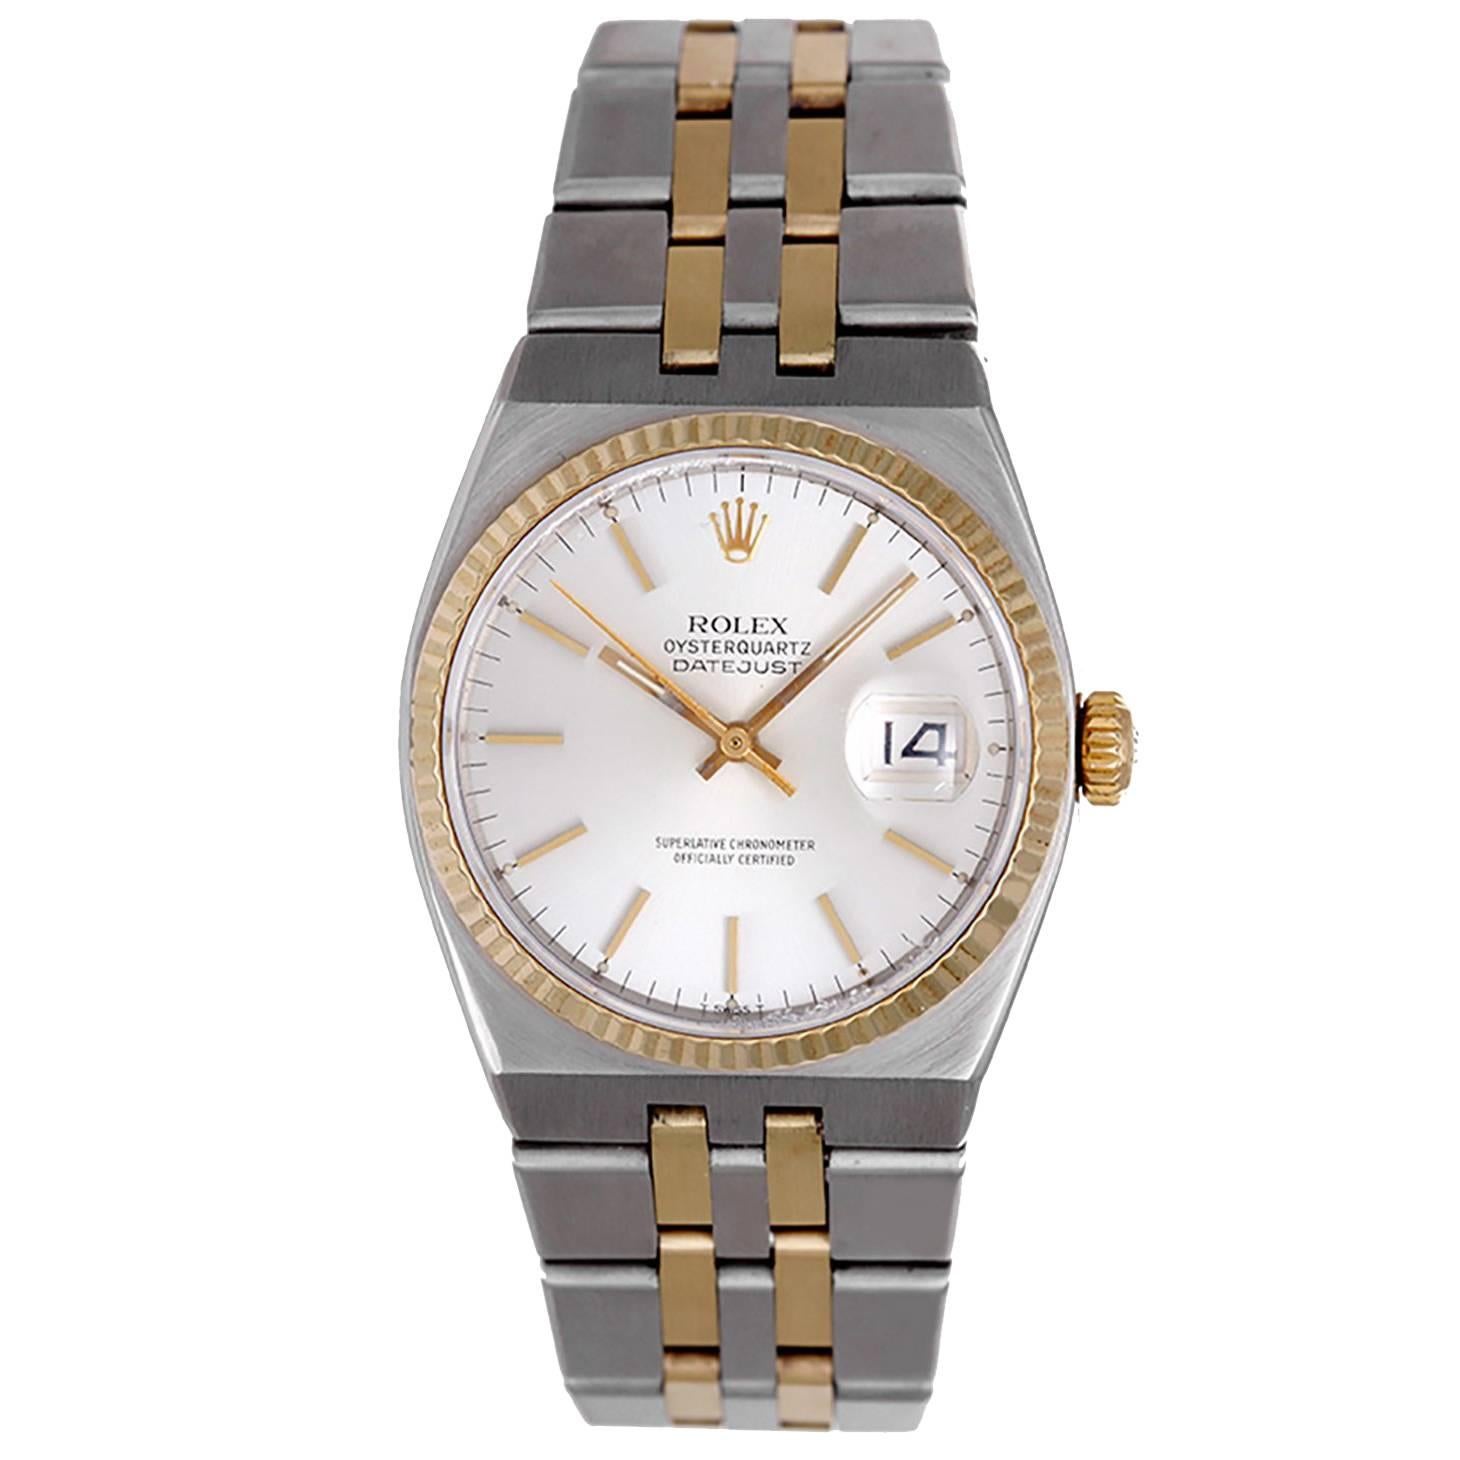 Rolex yellow gold Stainless steel OysterQuartz Datejust Wristwatch Ref 17013